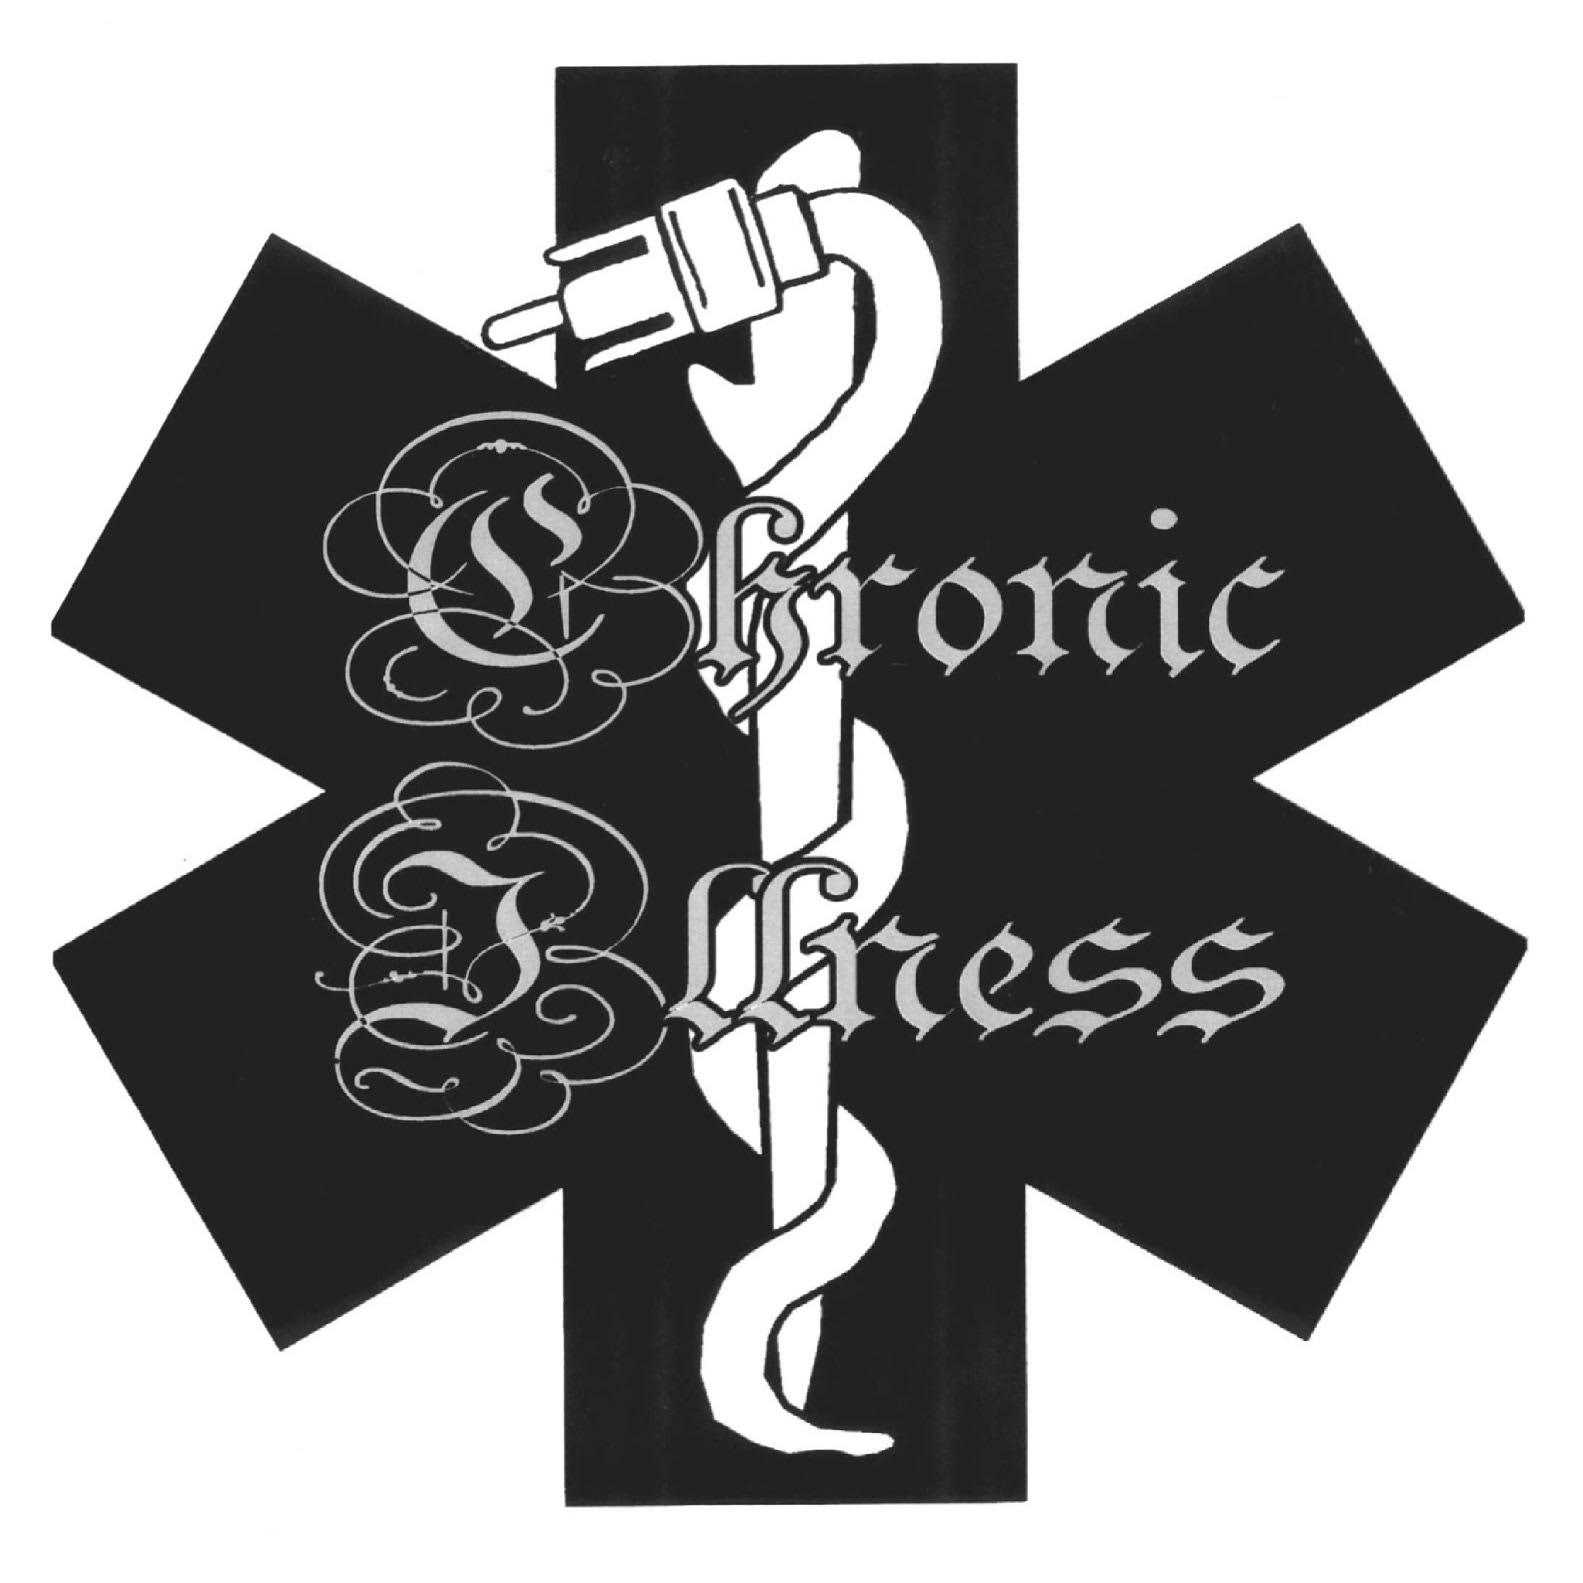 Chronic Illness Records